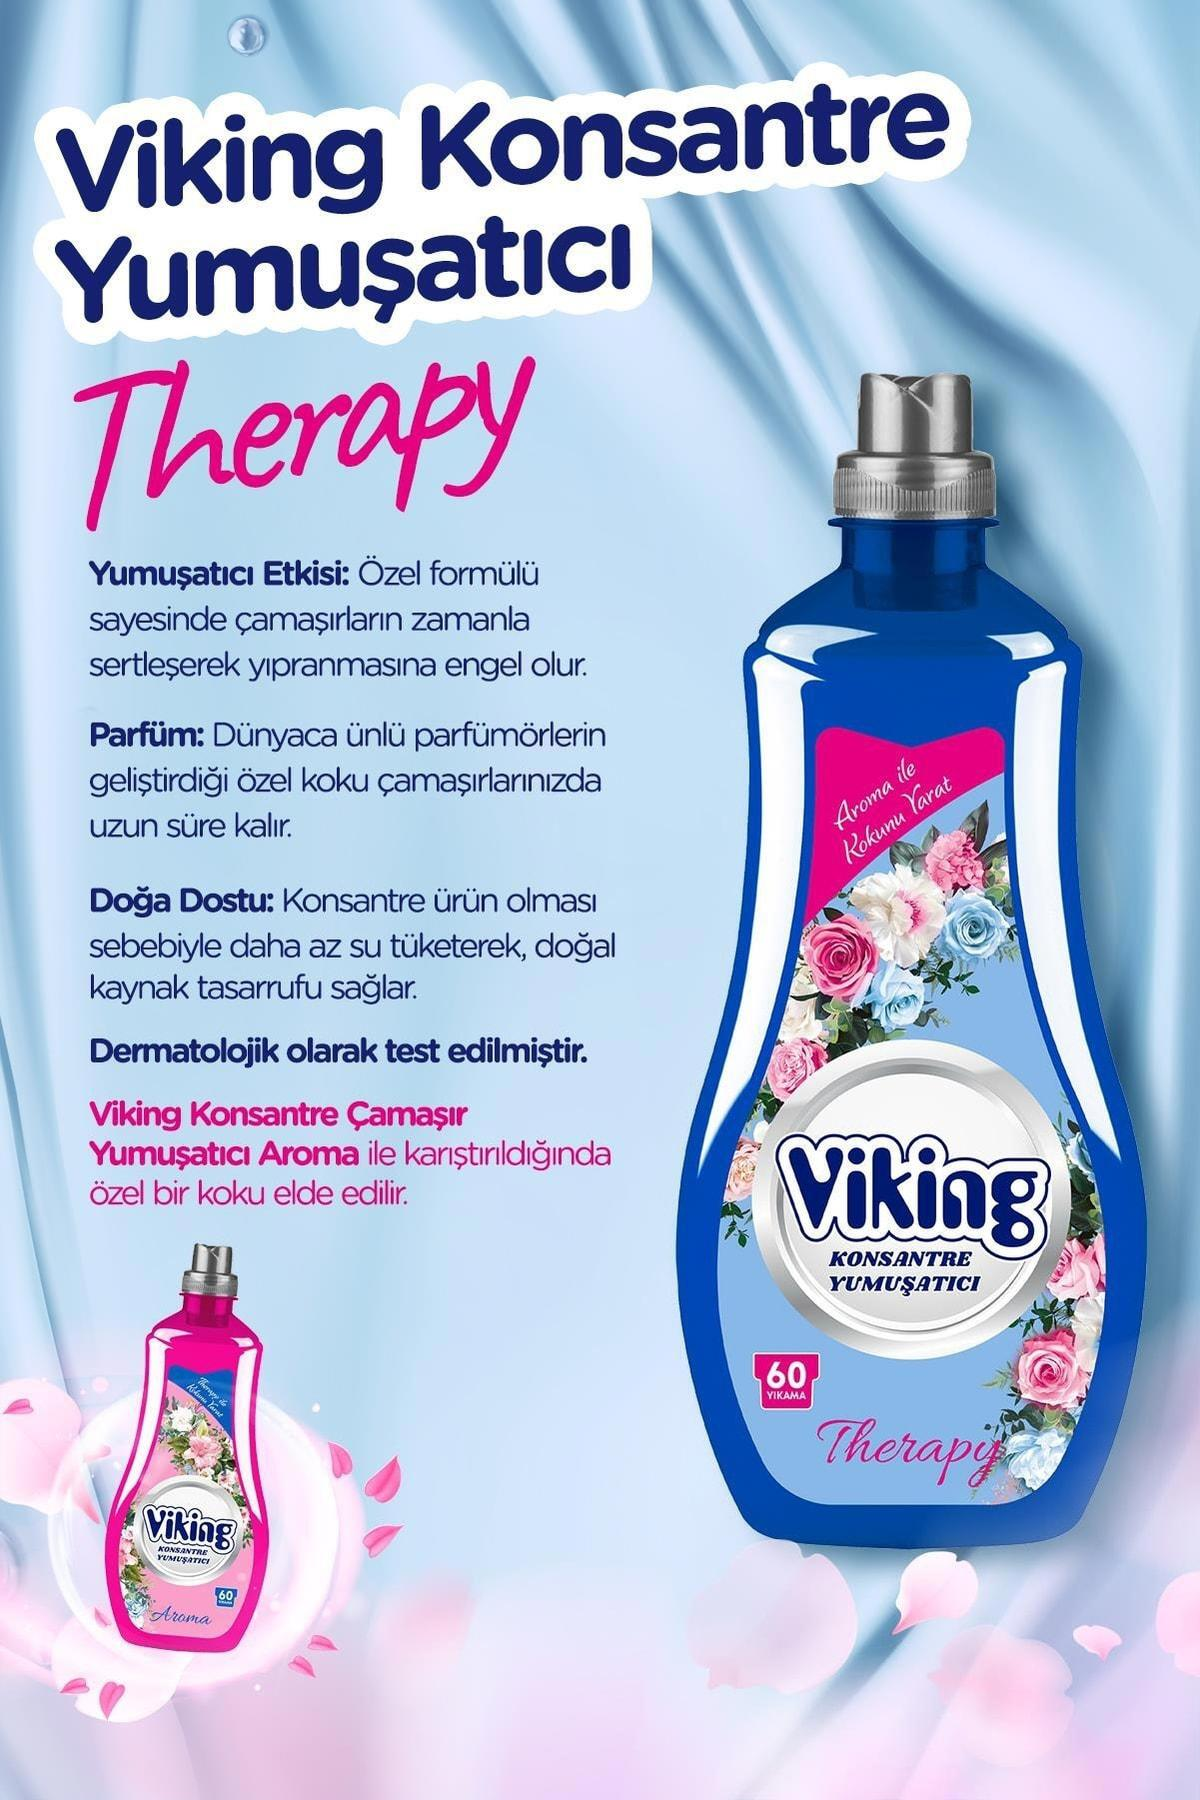 Viking Therapy 60 Yıkama Yumuşatıcı 6x1.44 lt